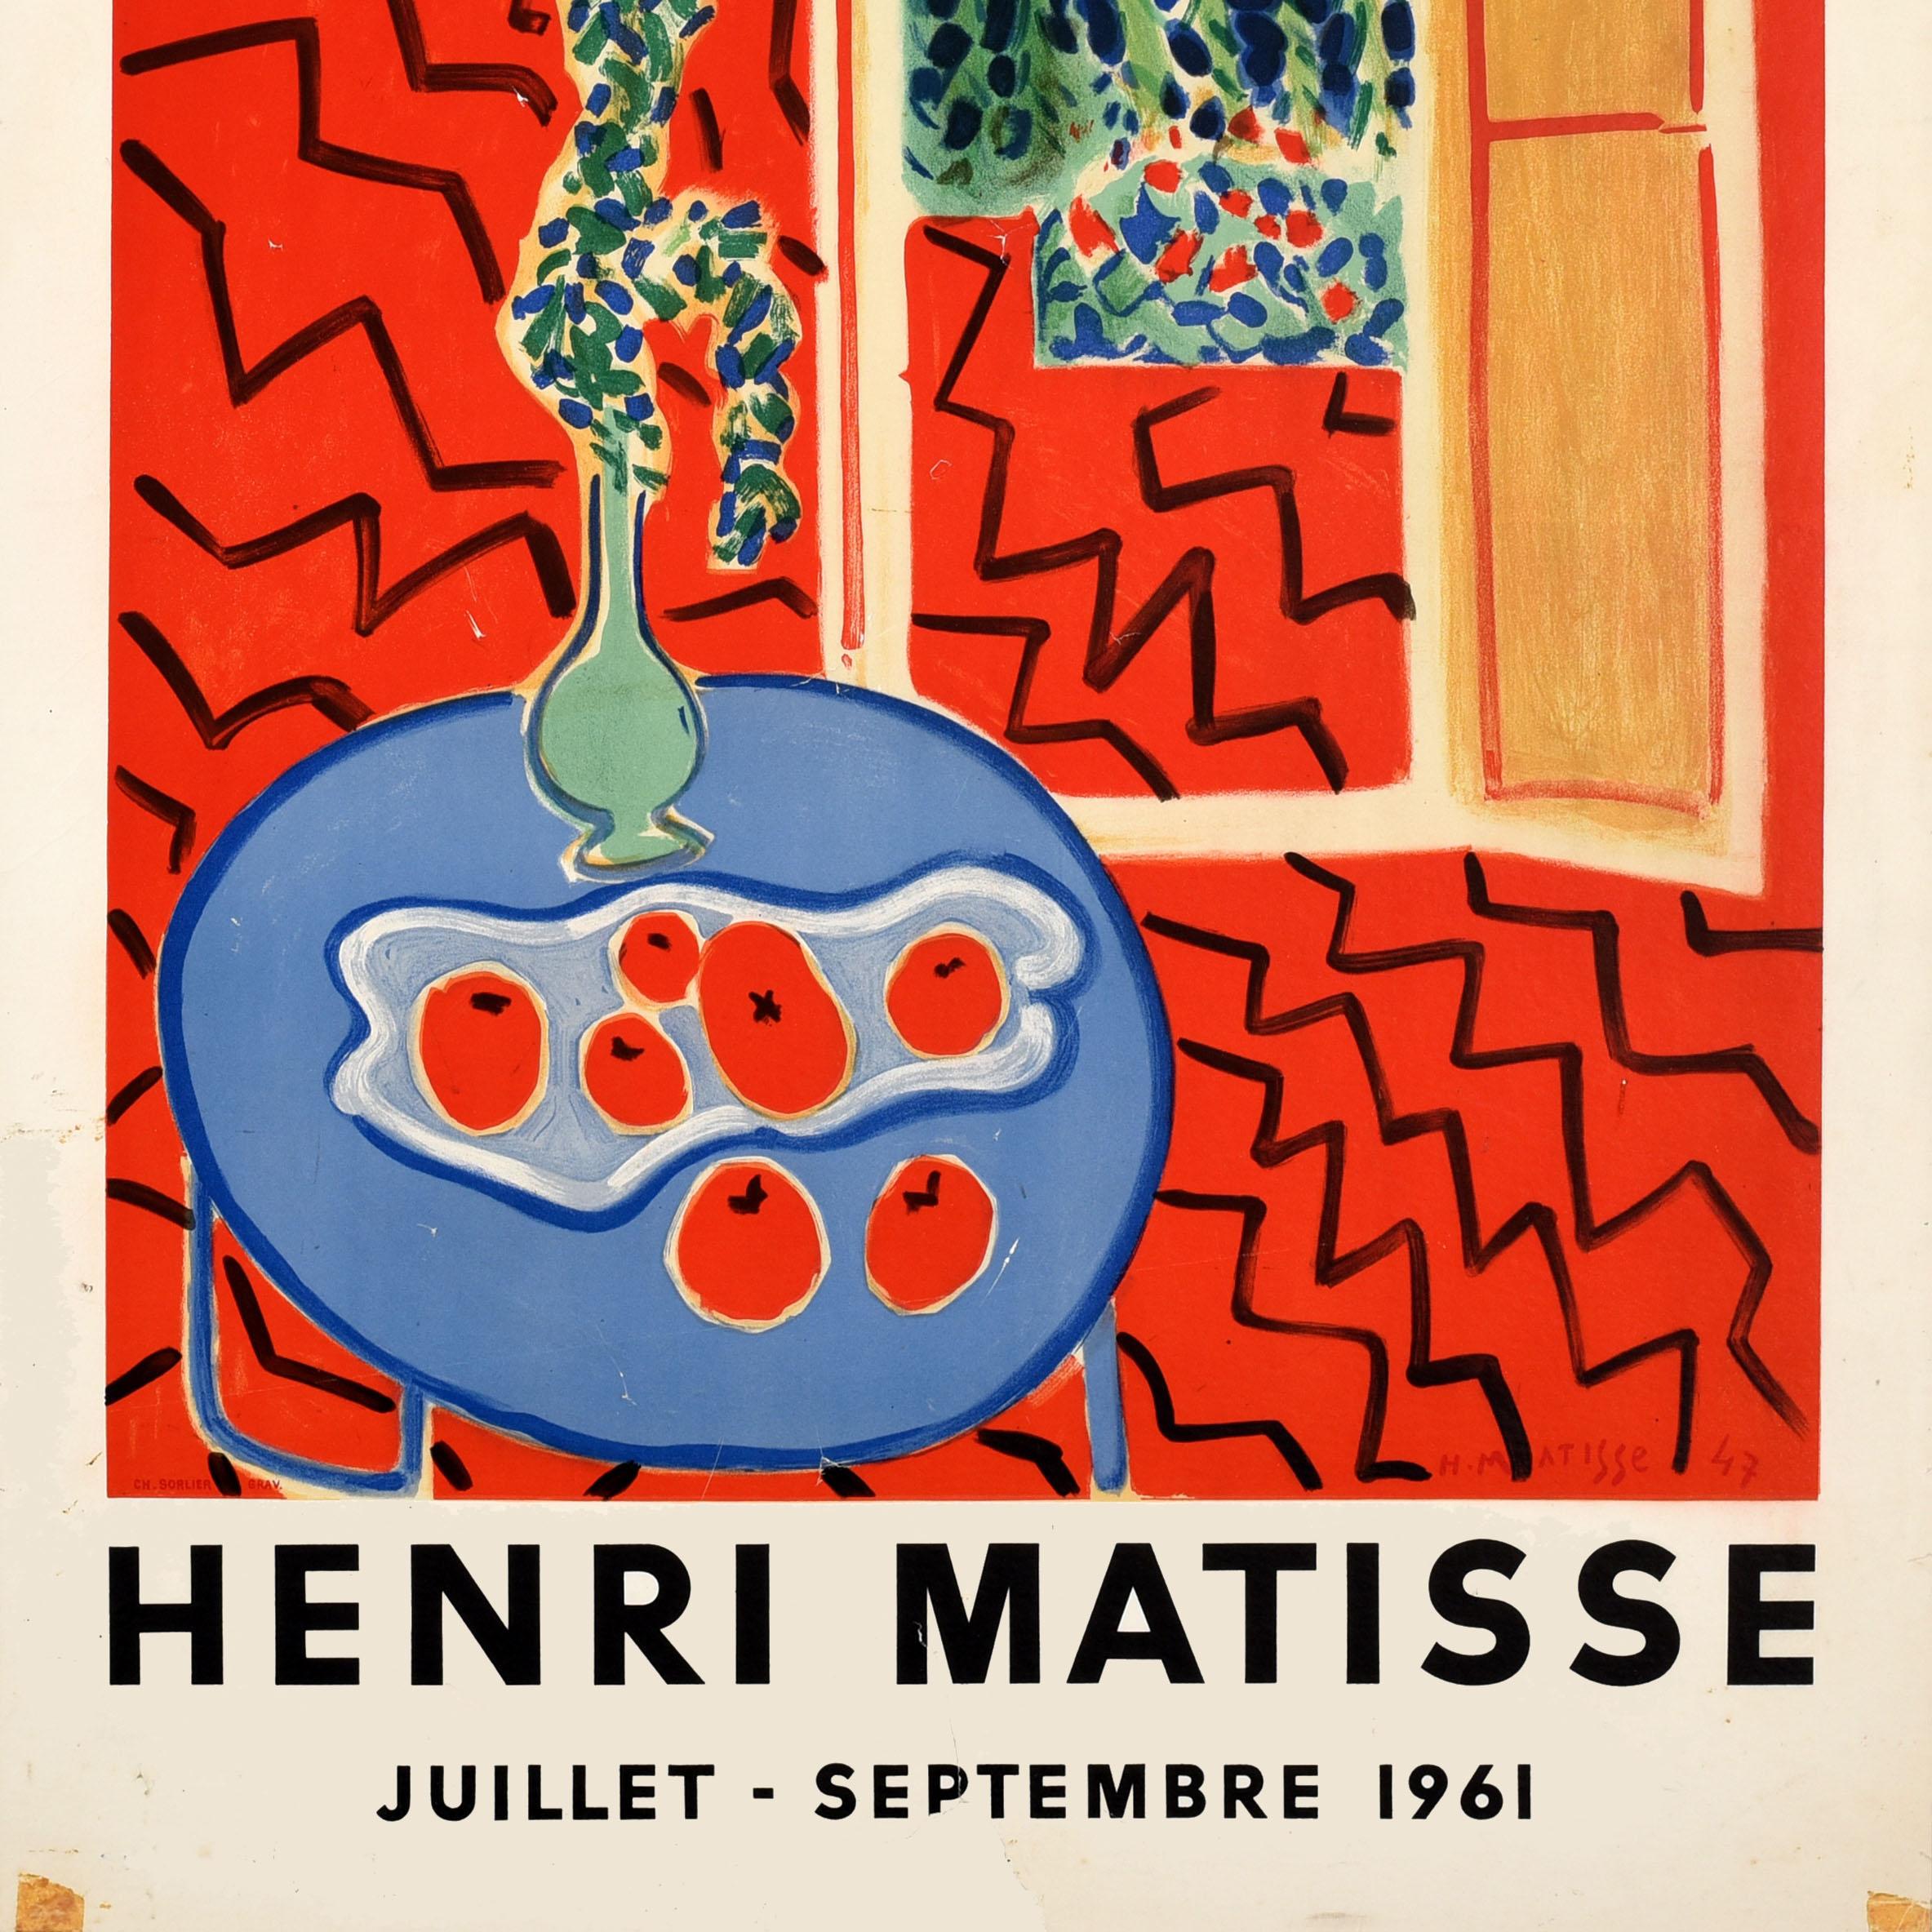 Original Vintage Art Exhibition Poster Henri Matisse Interieur Rouge Red France 3